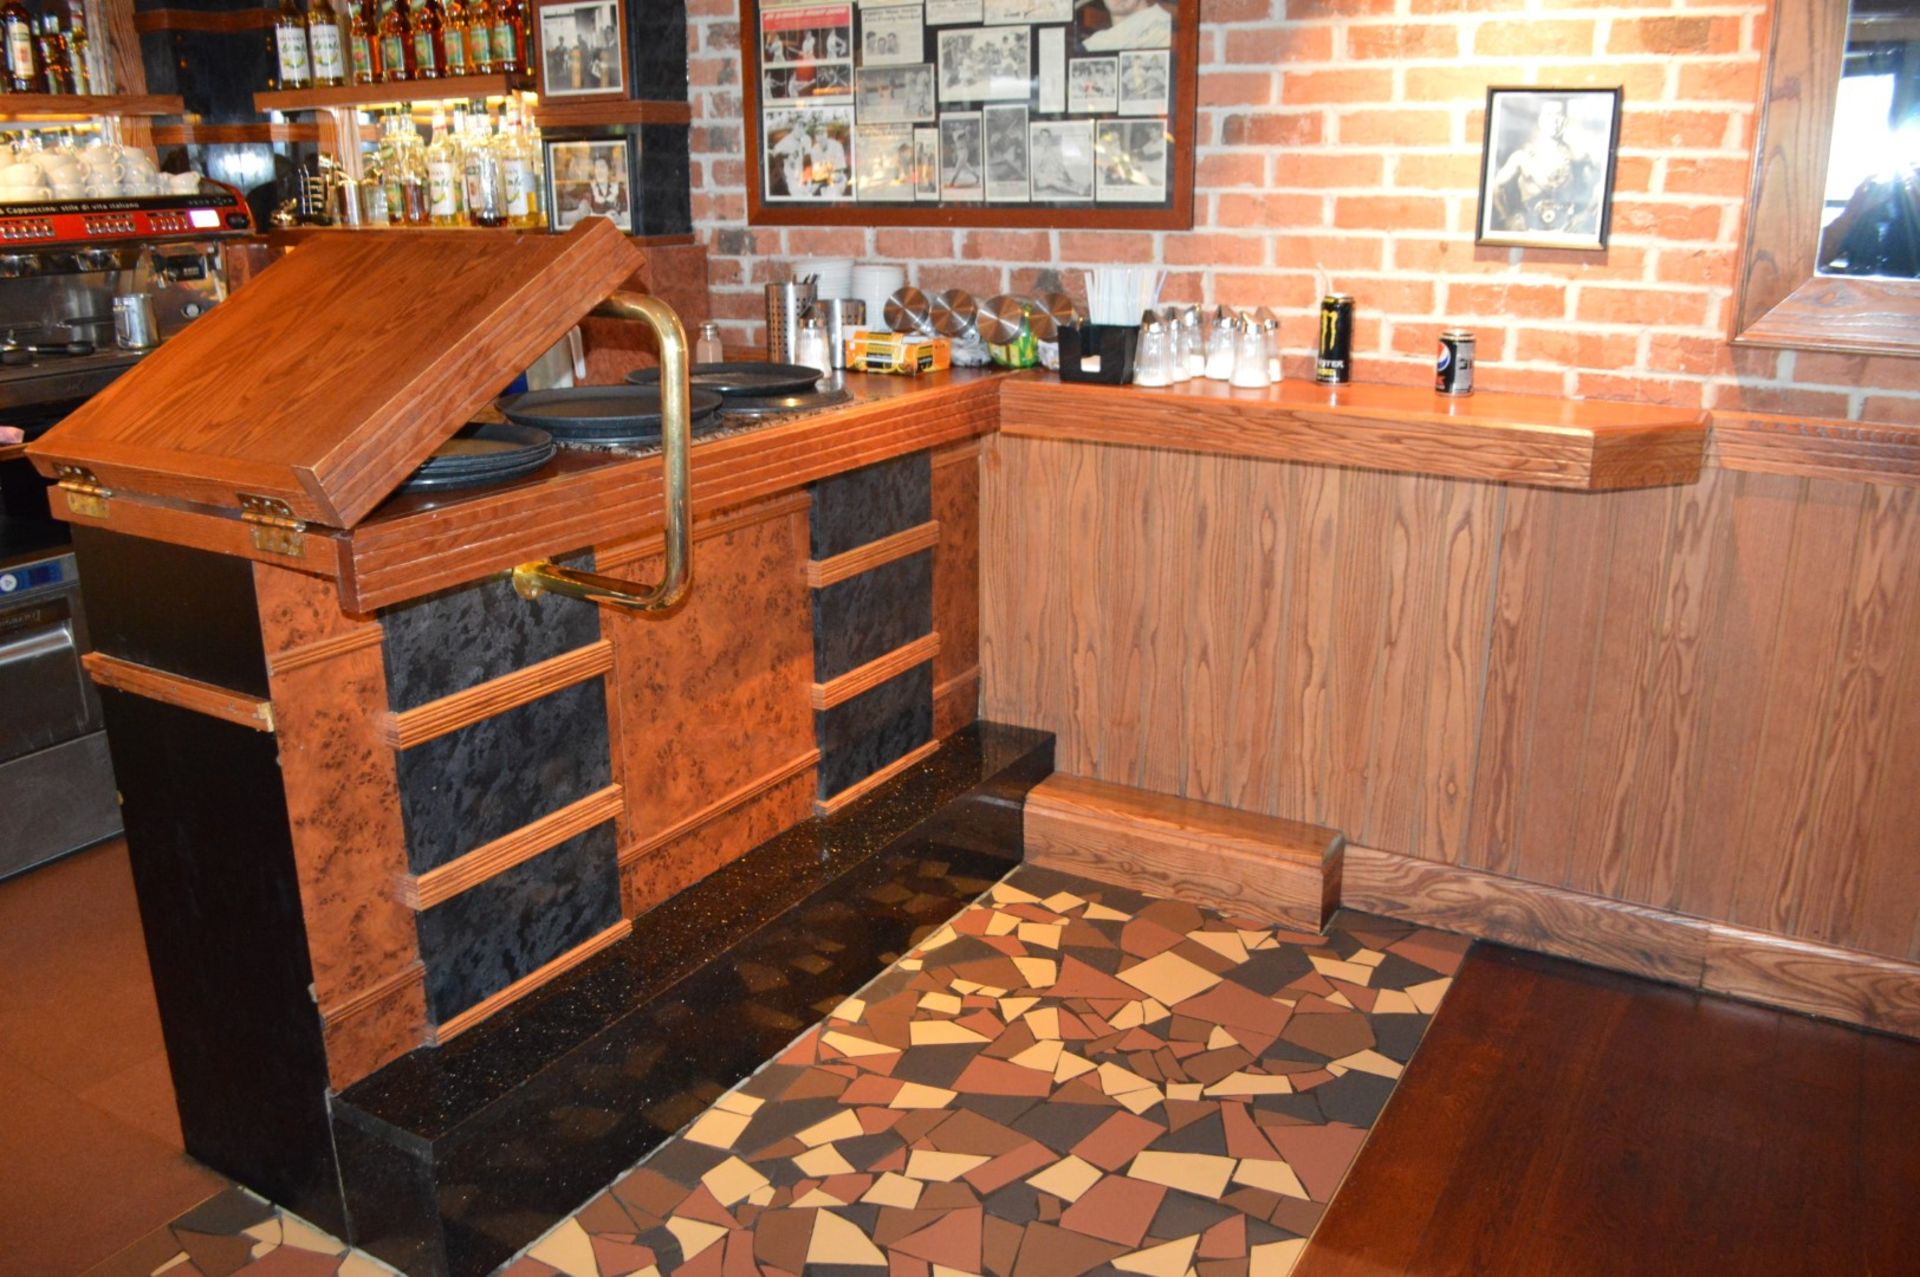 1 x Restaurant / Pub Bar and Backbar From American Diner Themed Restaurant - Burr Walnut and Black - Image 8 of 47